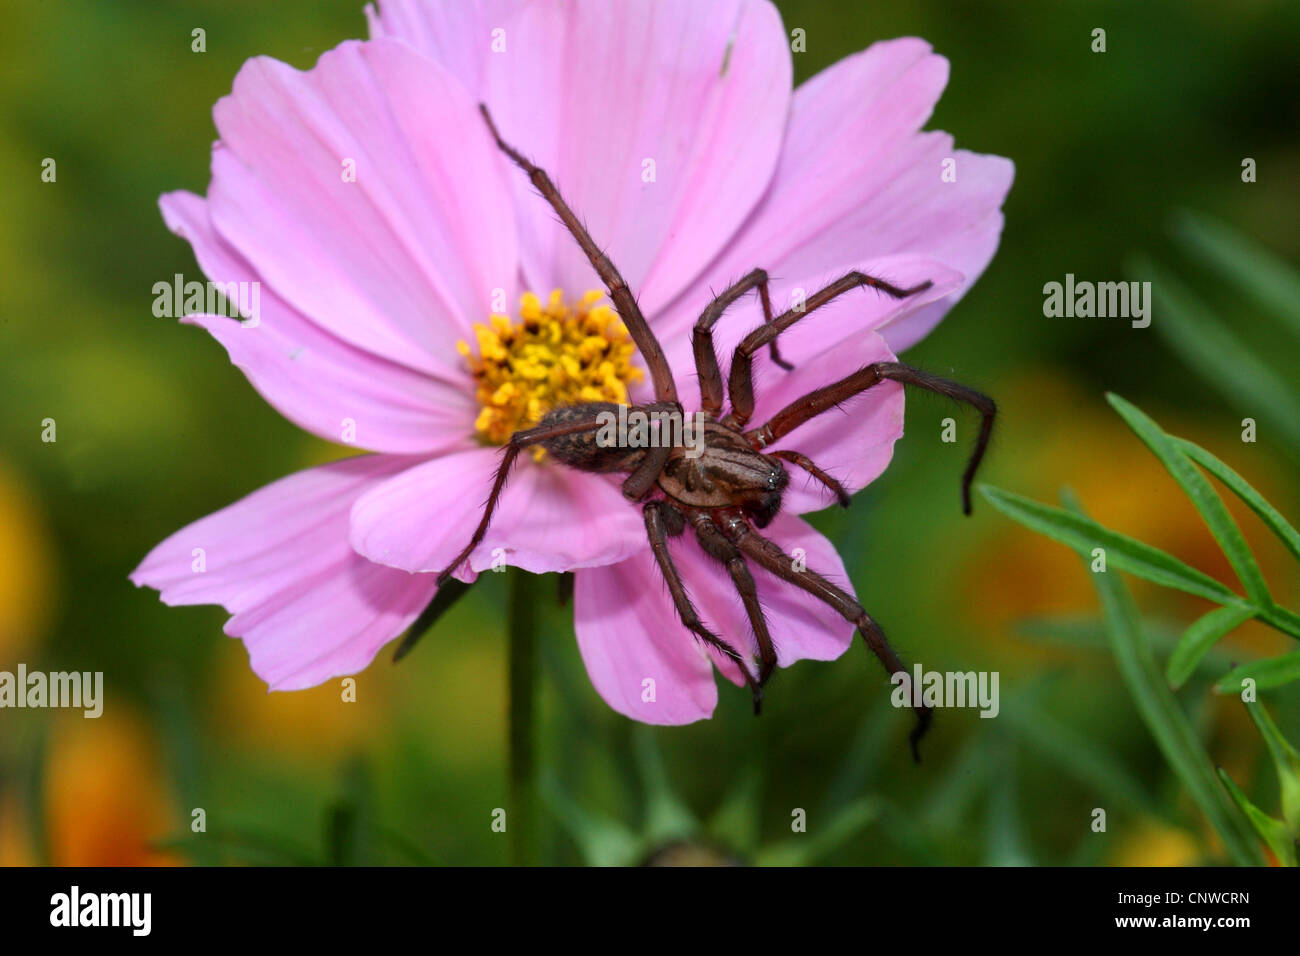 giant European house spider, giant house spider, larger house spider, cobweb spider (Tegenaria gigantea, Tegenaria atrica), sitting on a flower Stock Photo